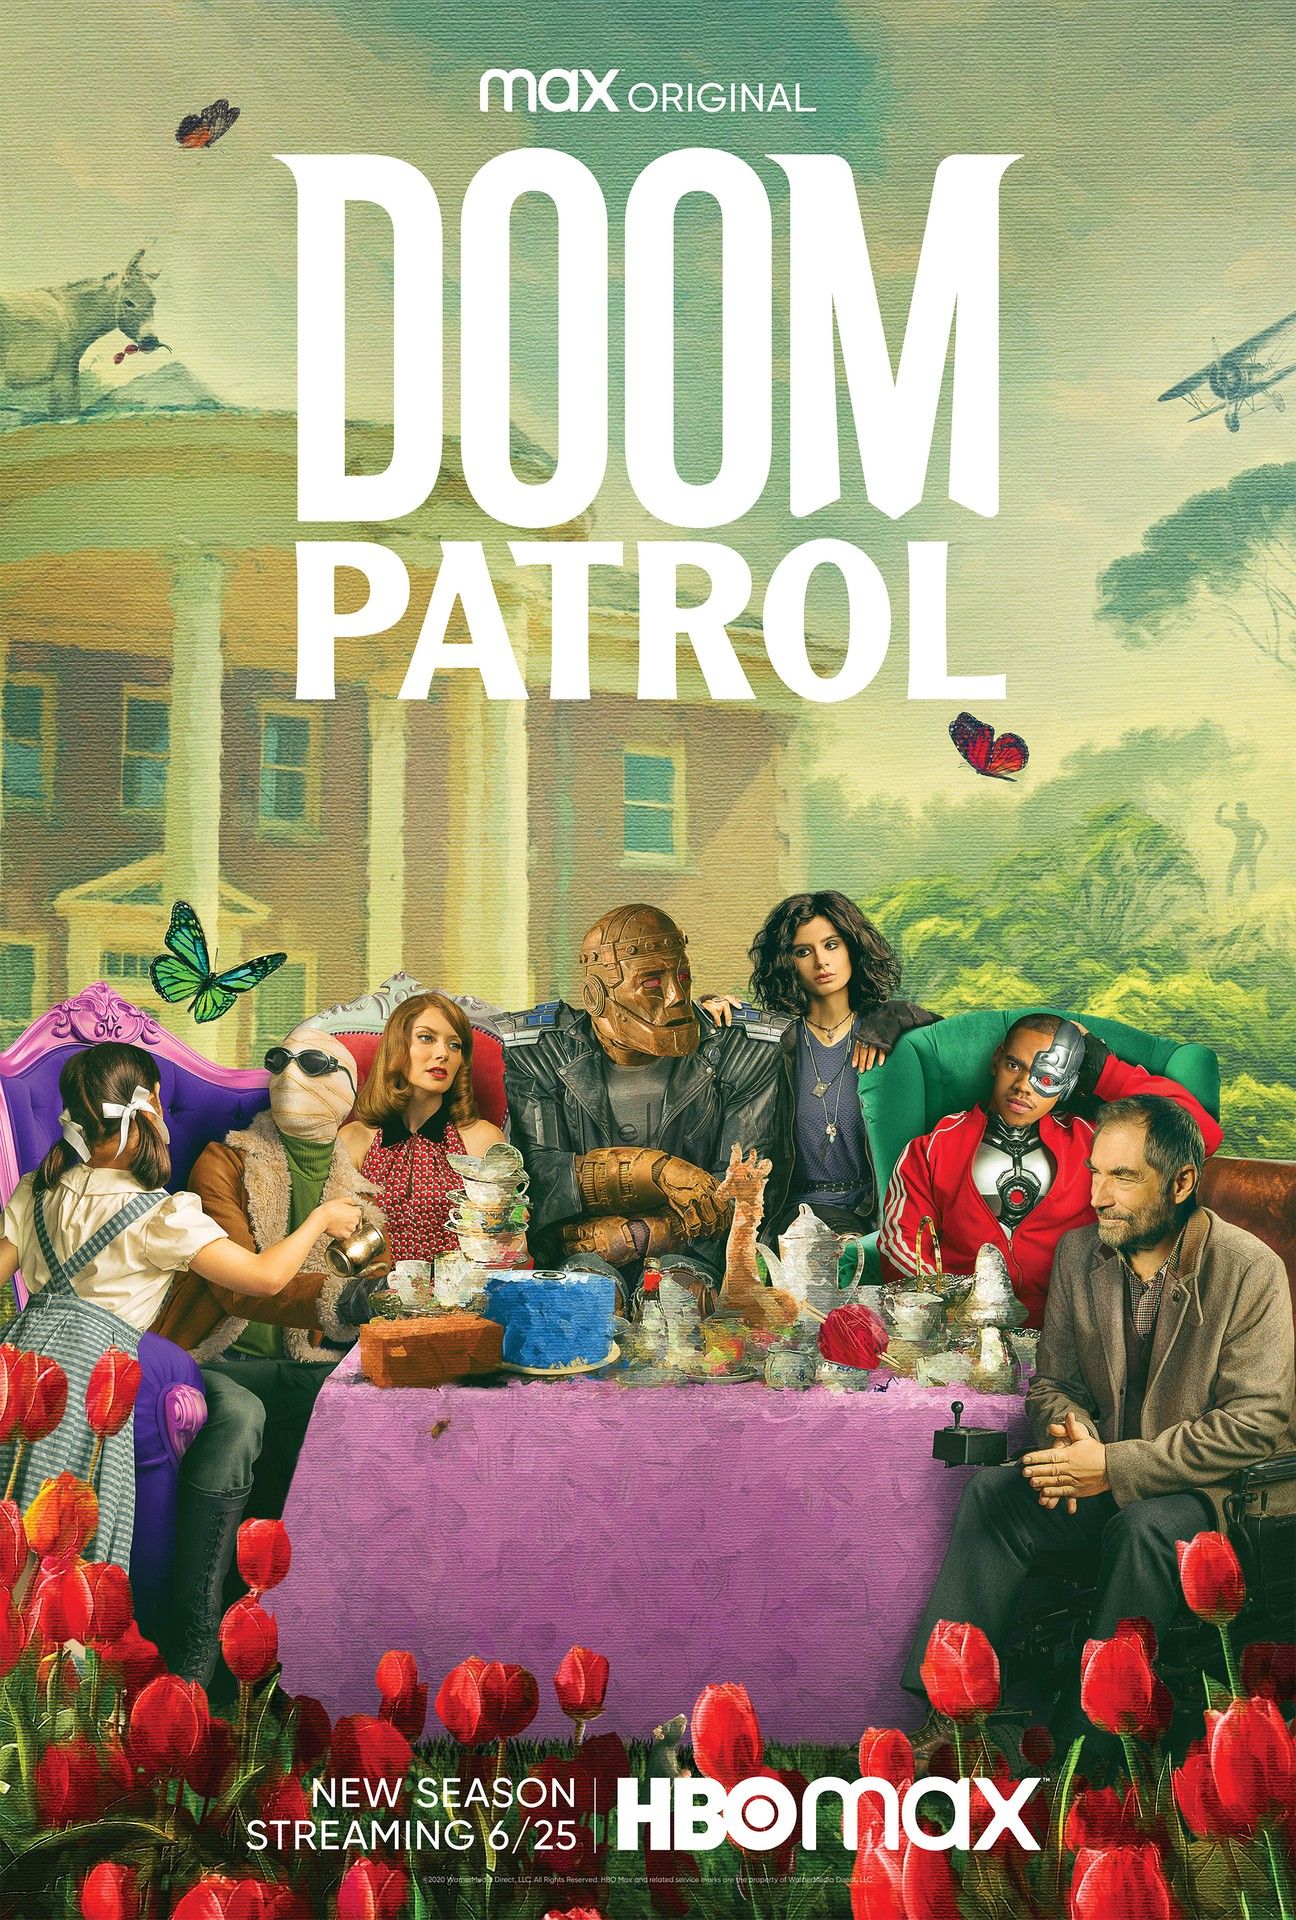 Doom Patrol HBO Max season 2 poster